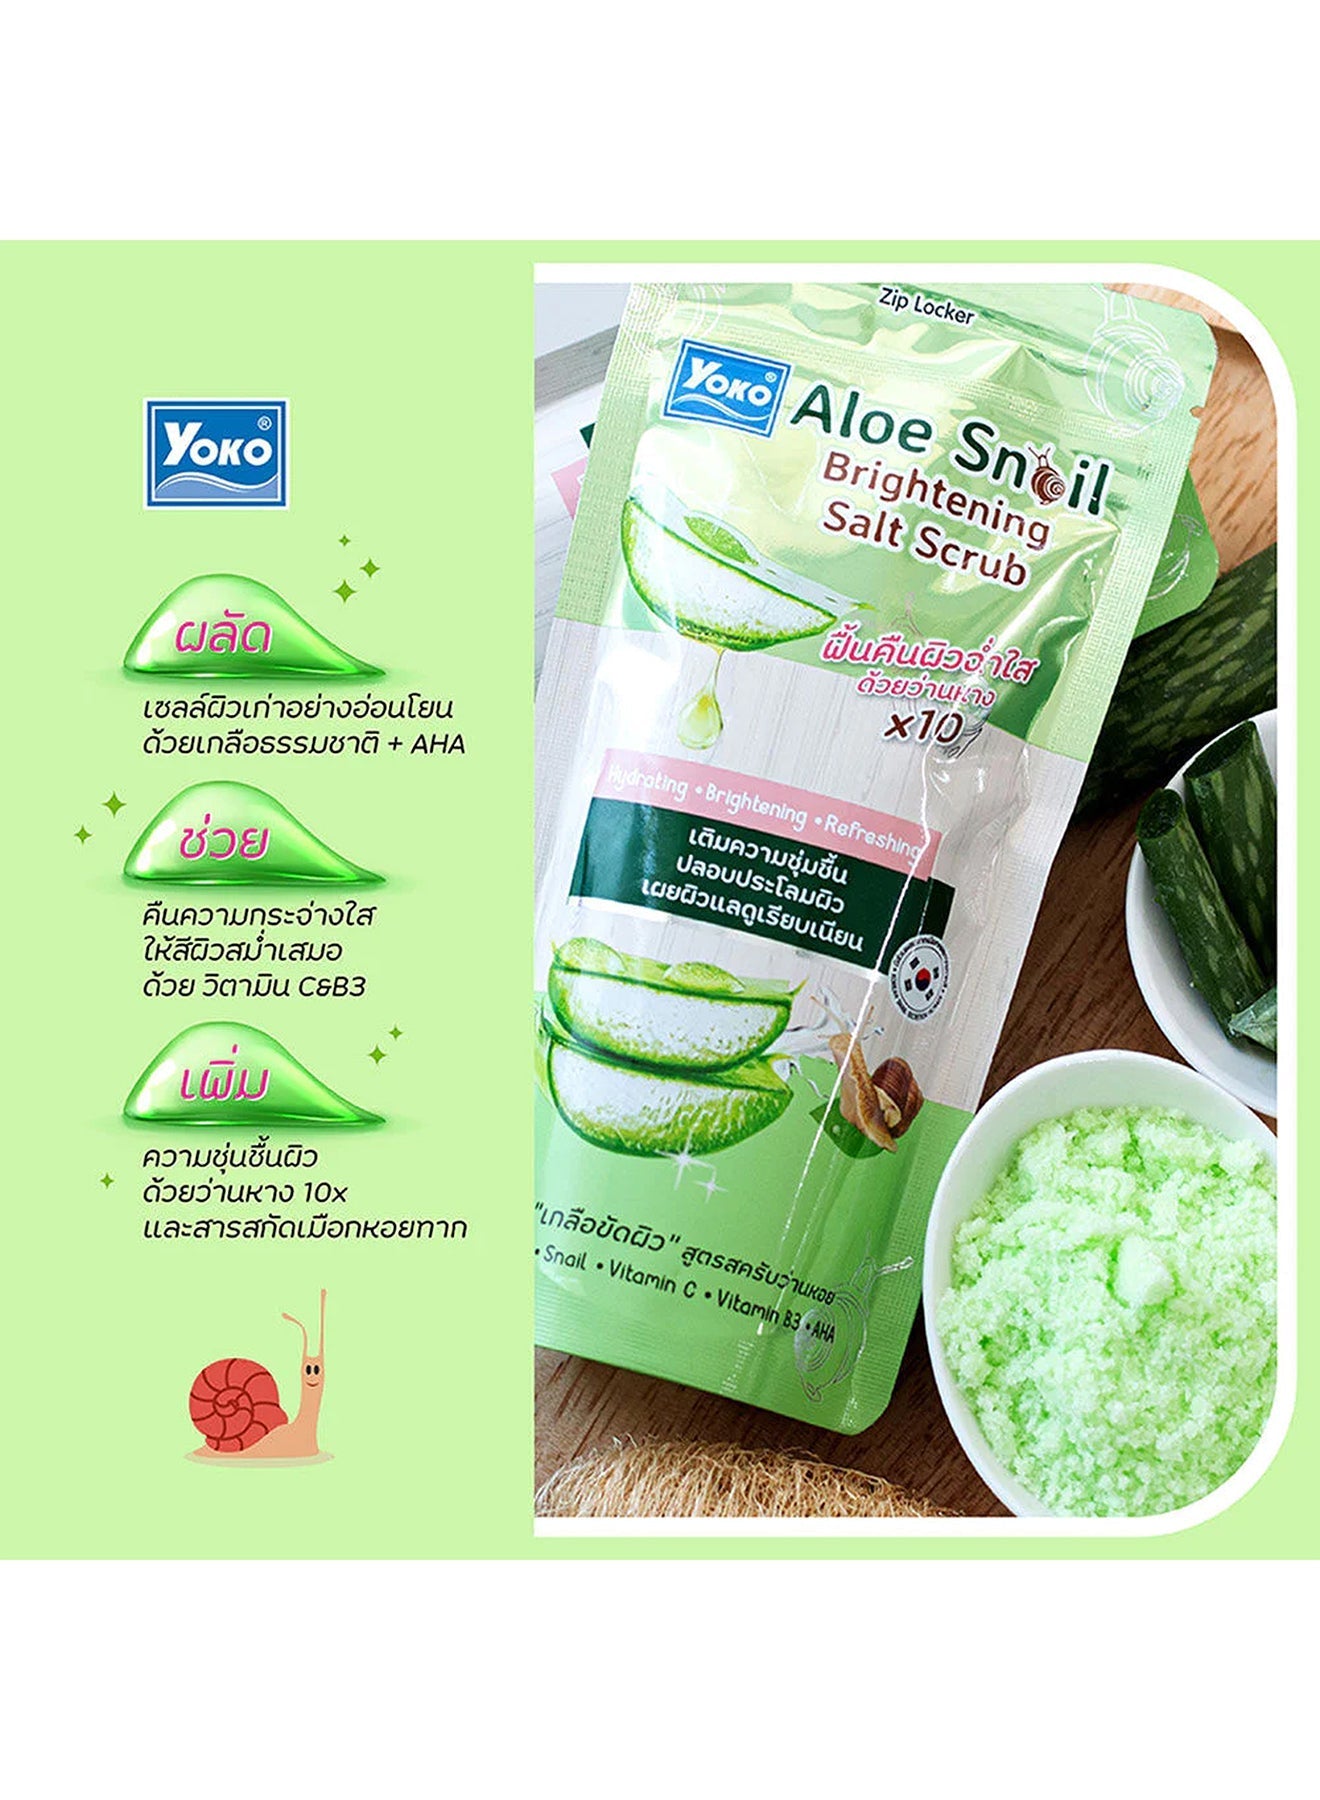 Yoko aloe snail brightening salt scrub with Aloe Snail Vitamin C Vitamin B3  300g